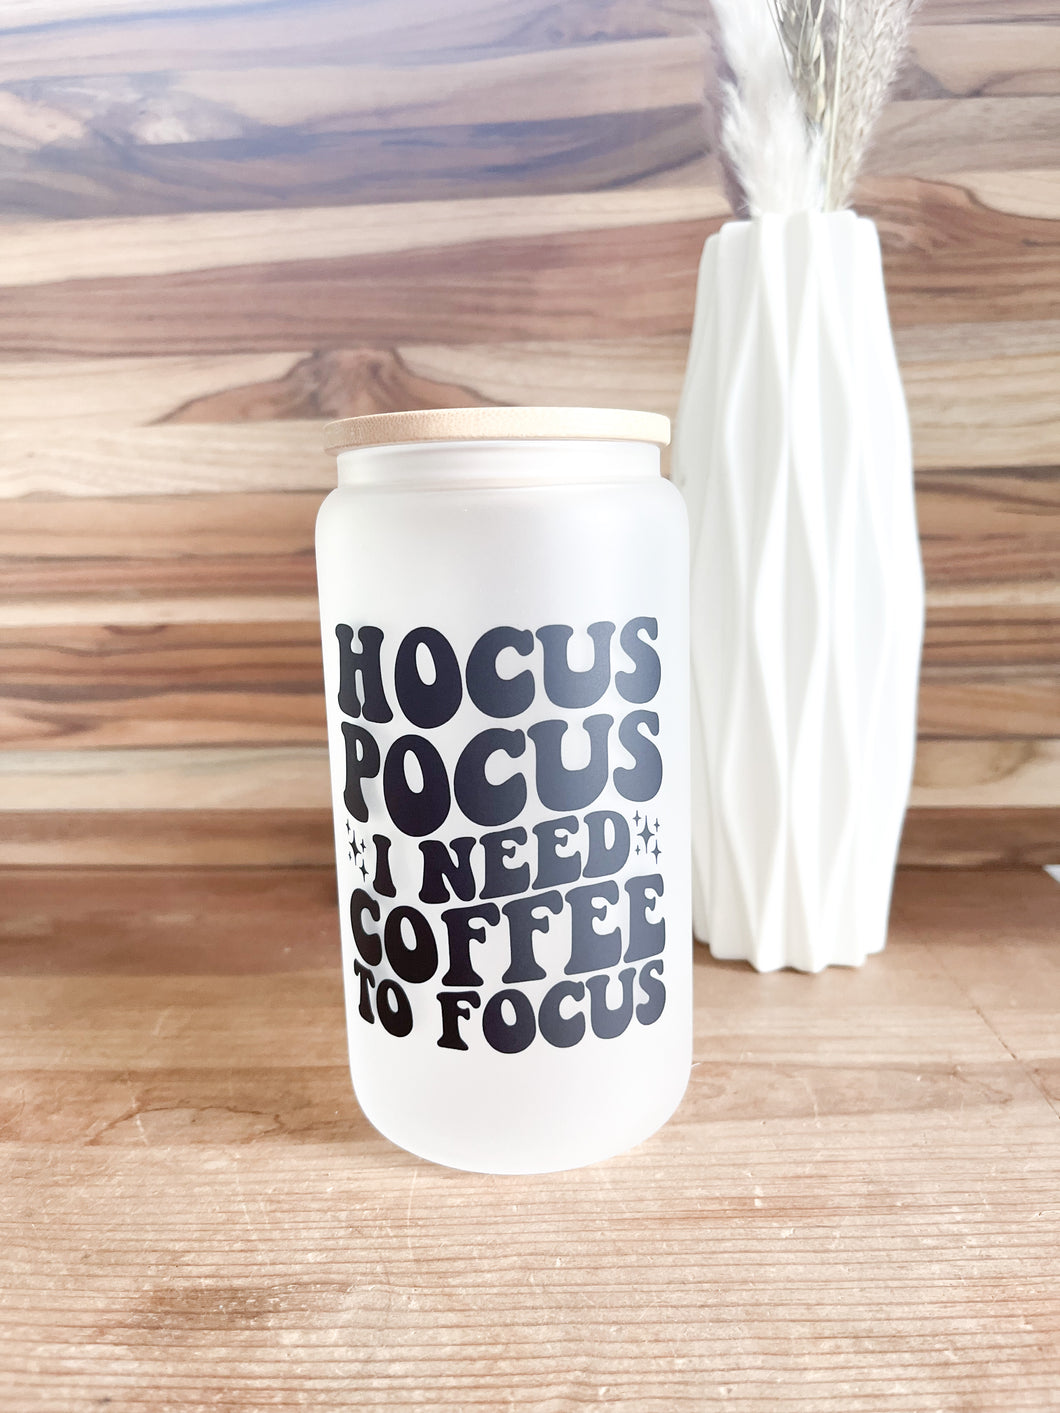 Hocus Pocus I need Coffee to Focus